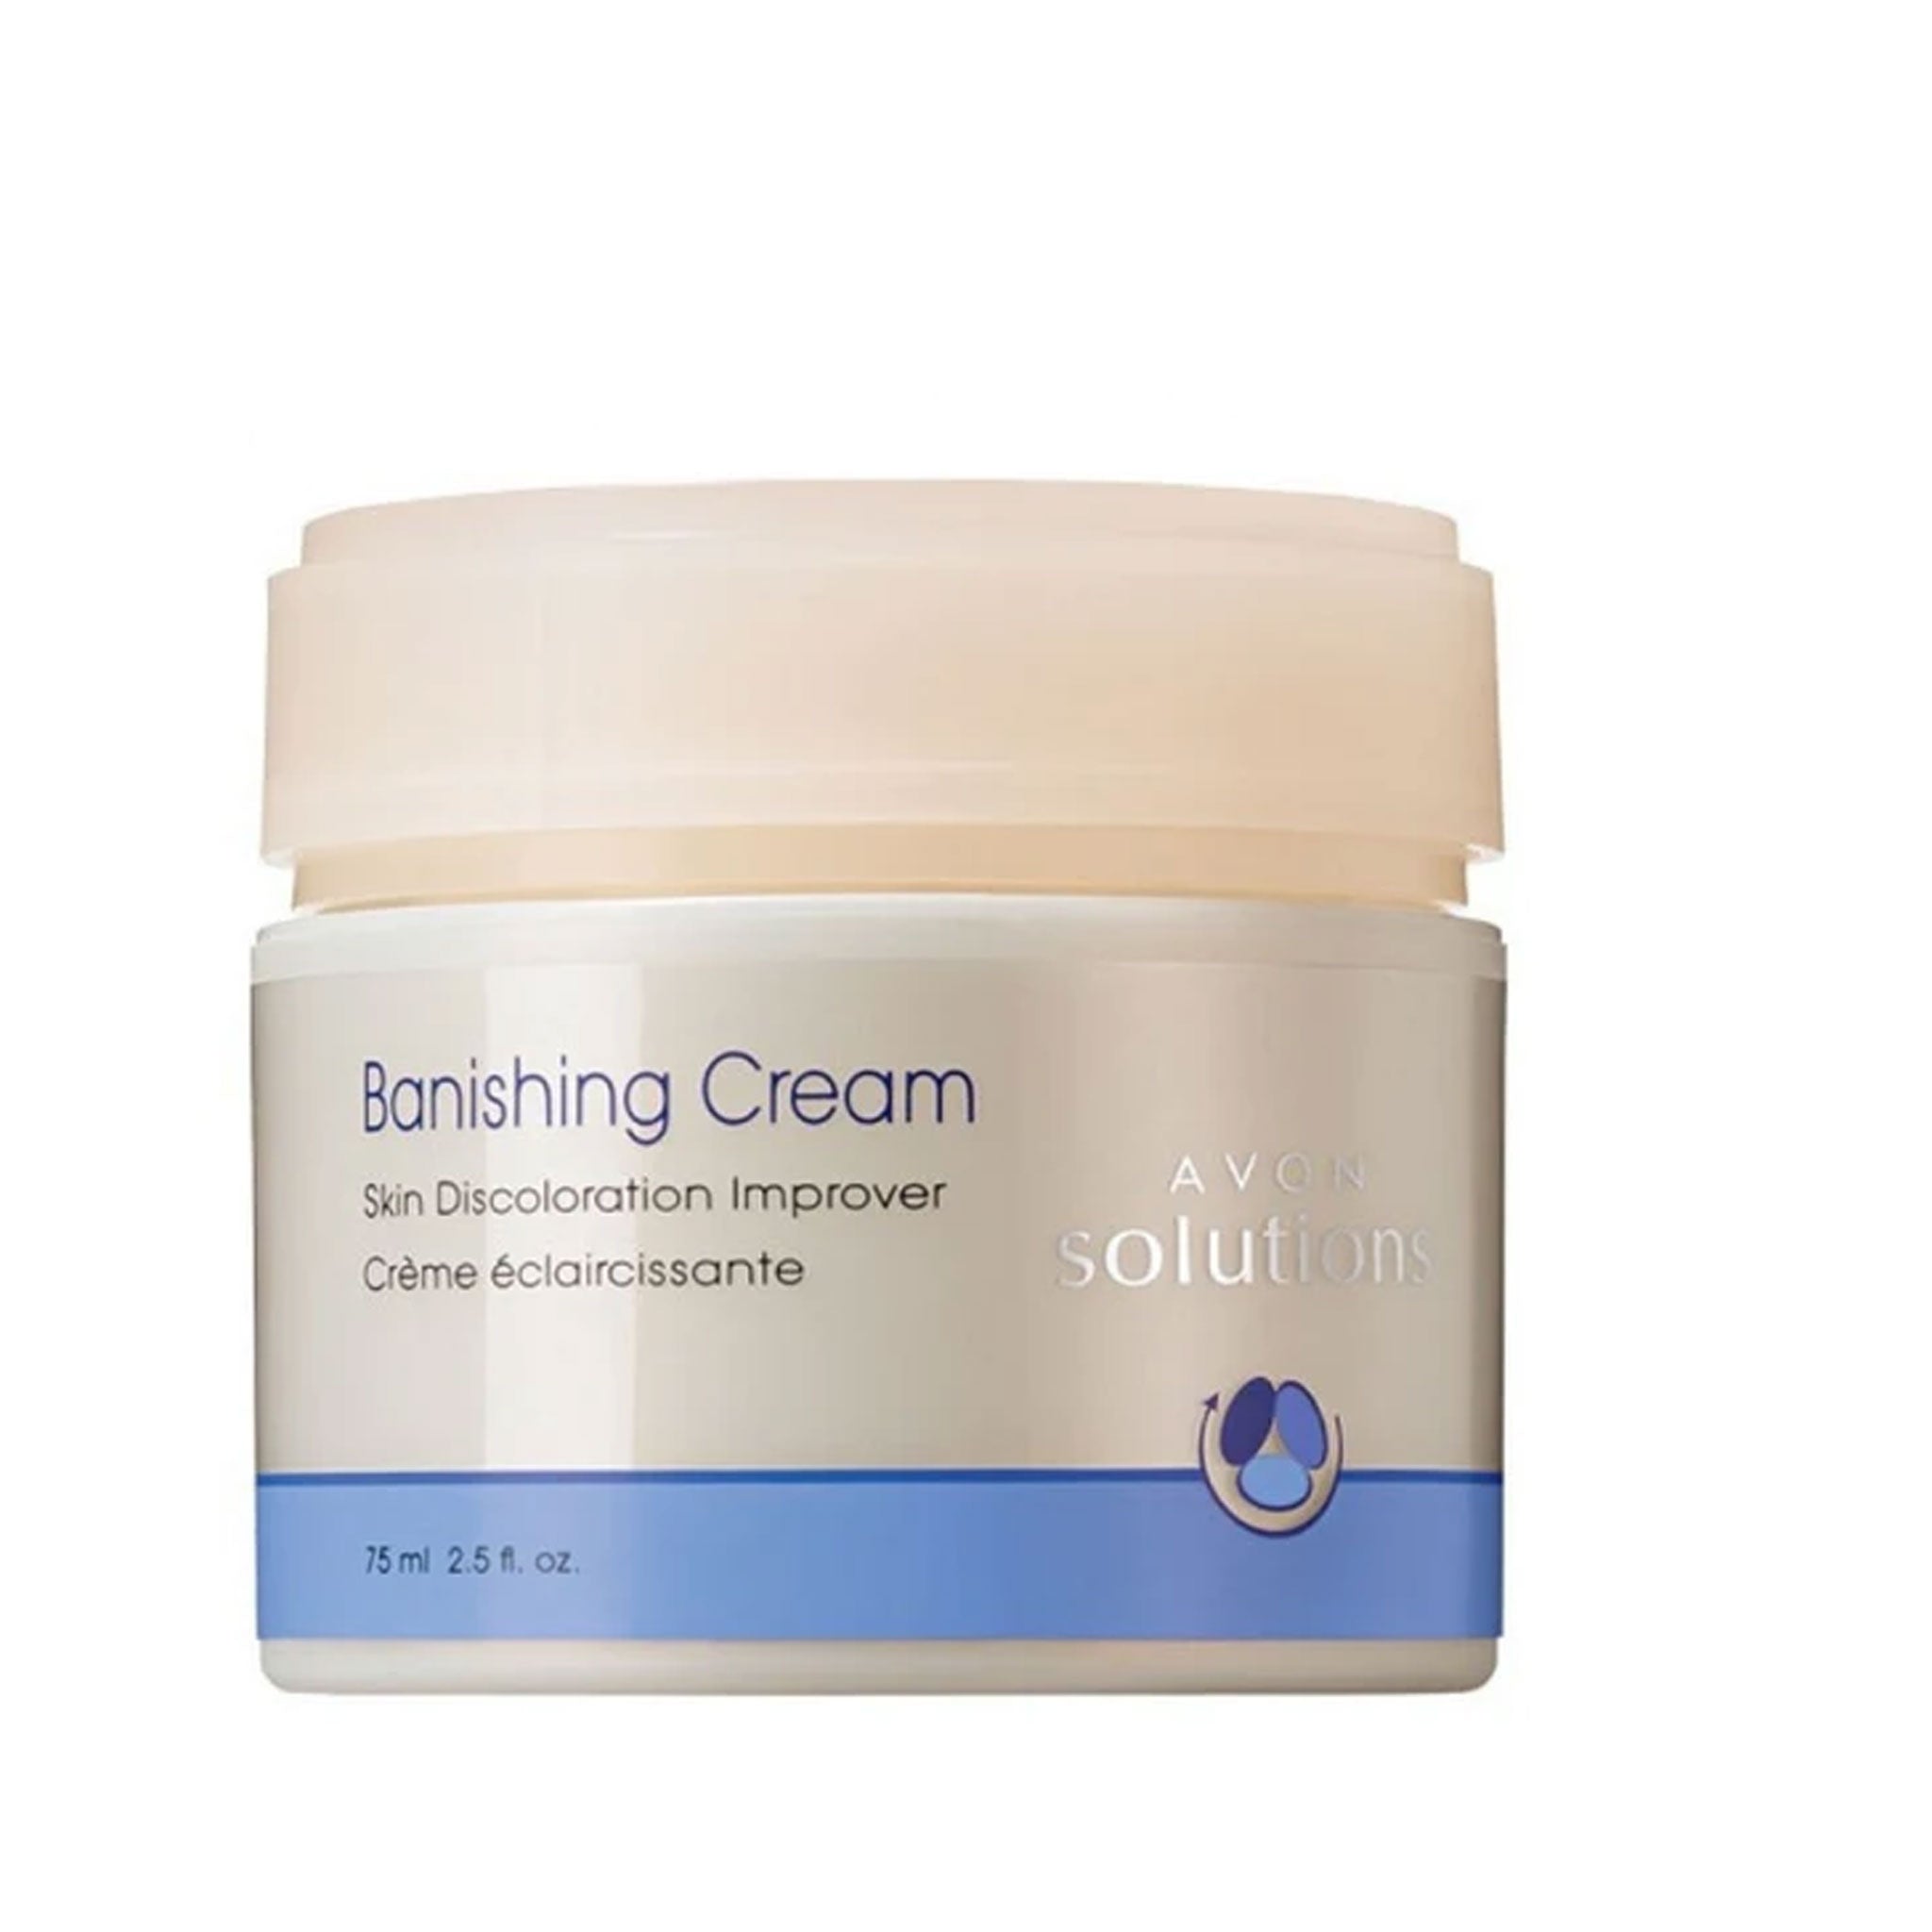 Avon Solutions Banishing Cream Skin Discoloration Improver